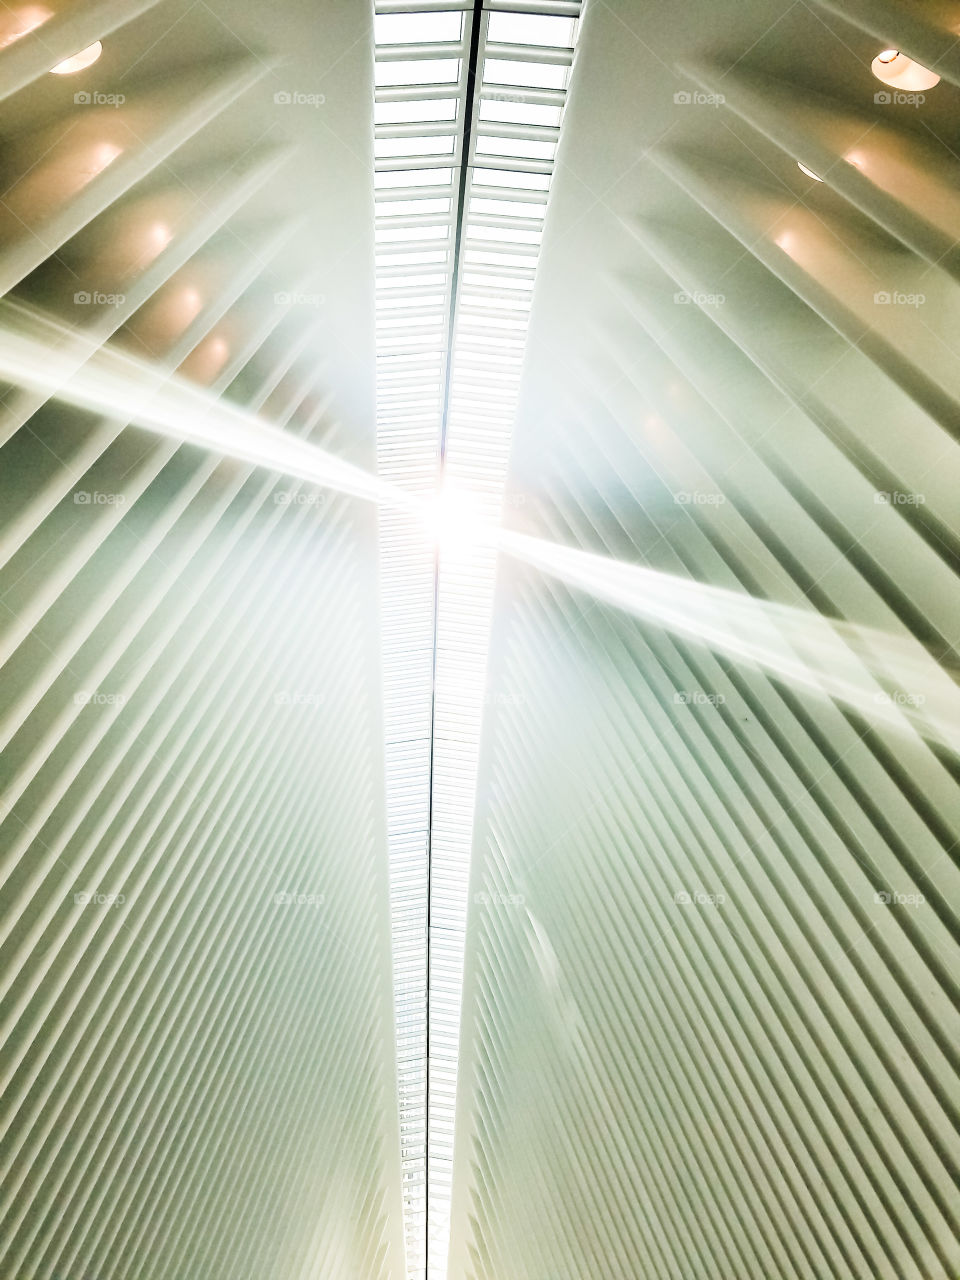 Calatrava's PATH station at the World Trade Centre